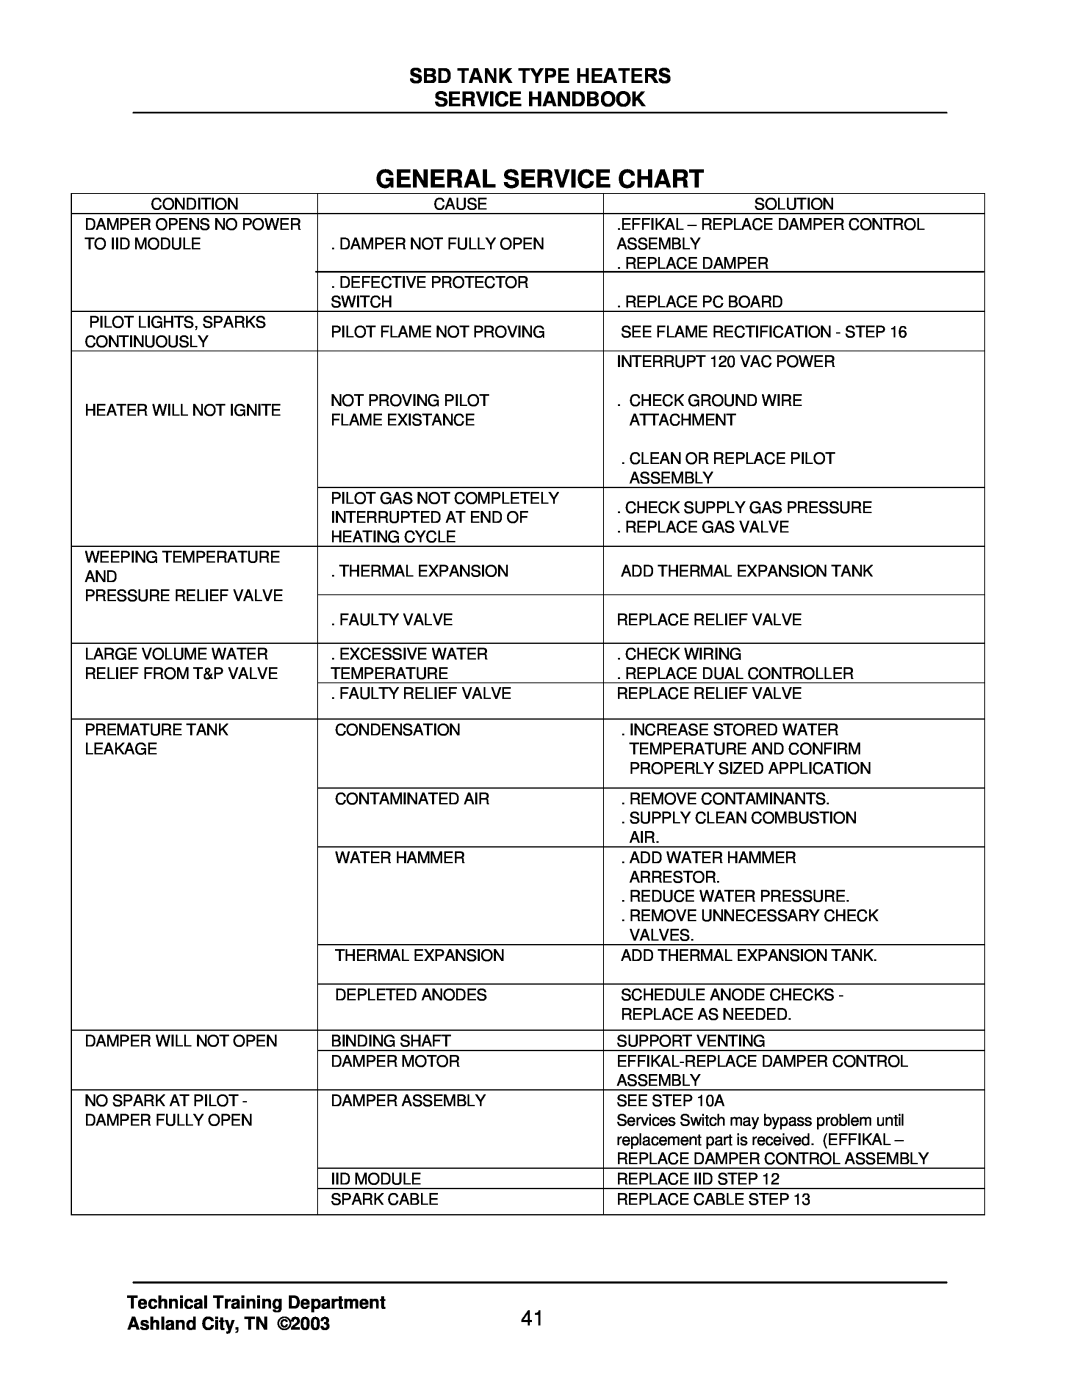 State Industries SBD85 500, SBD71 120 manual General Service Chart, Sbd Tank Type Heaters, Service Handbook 